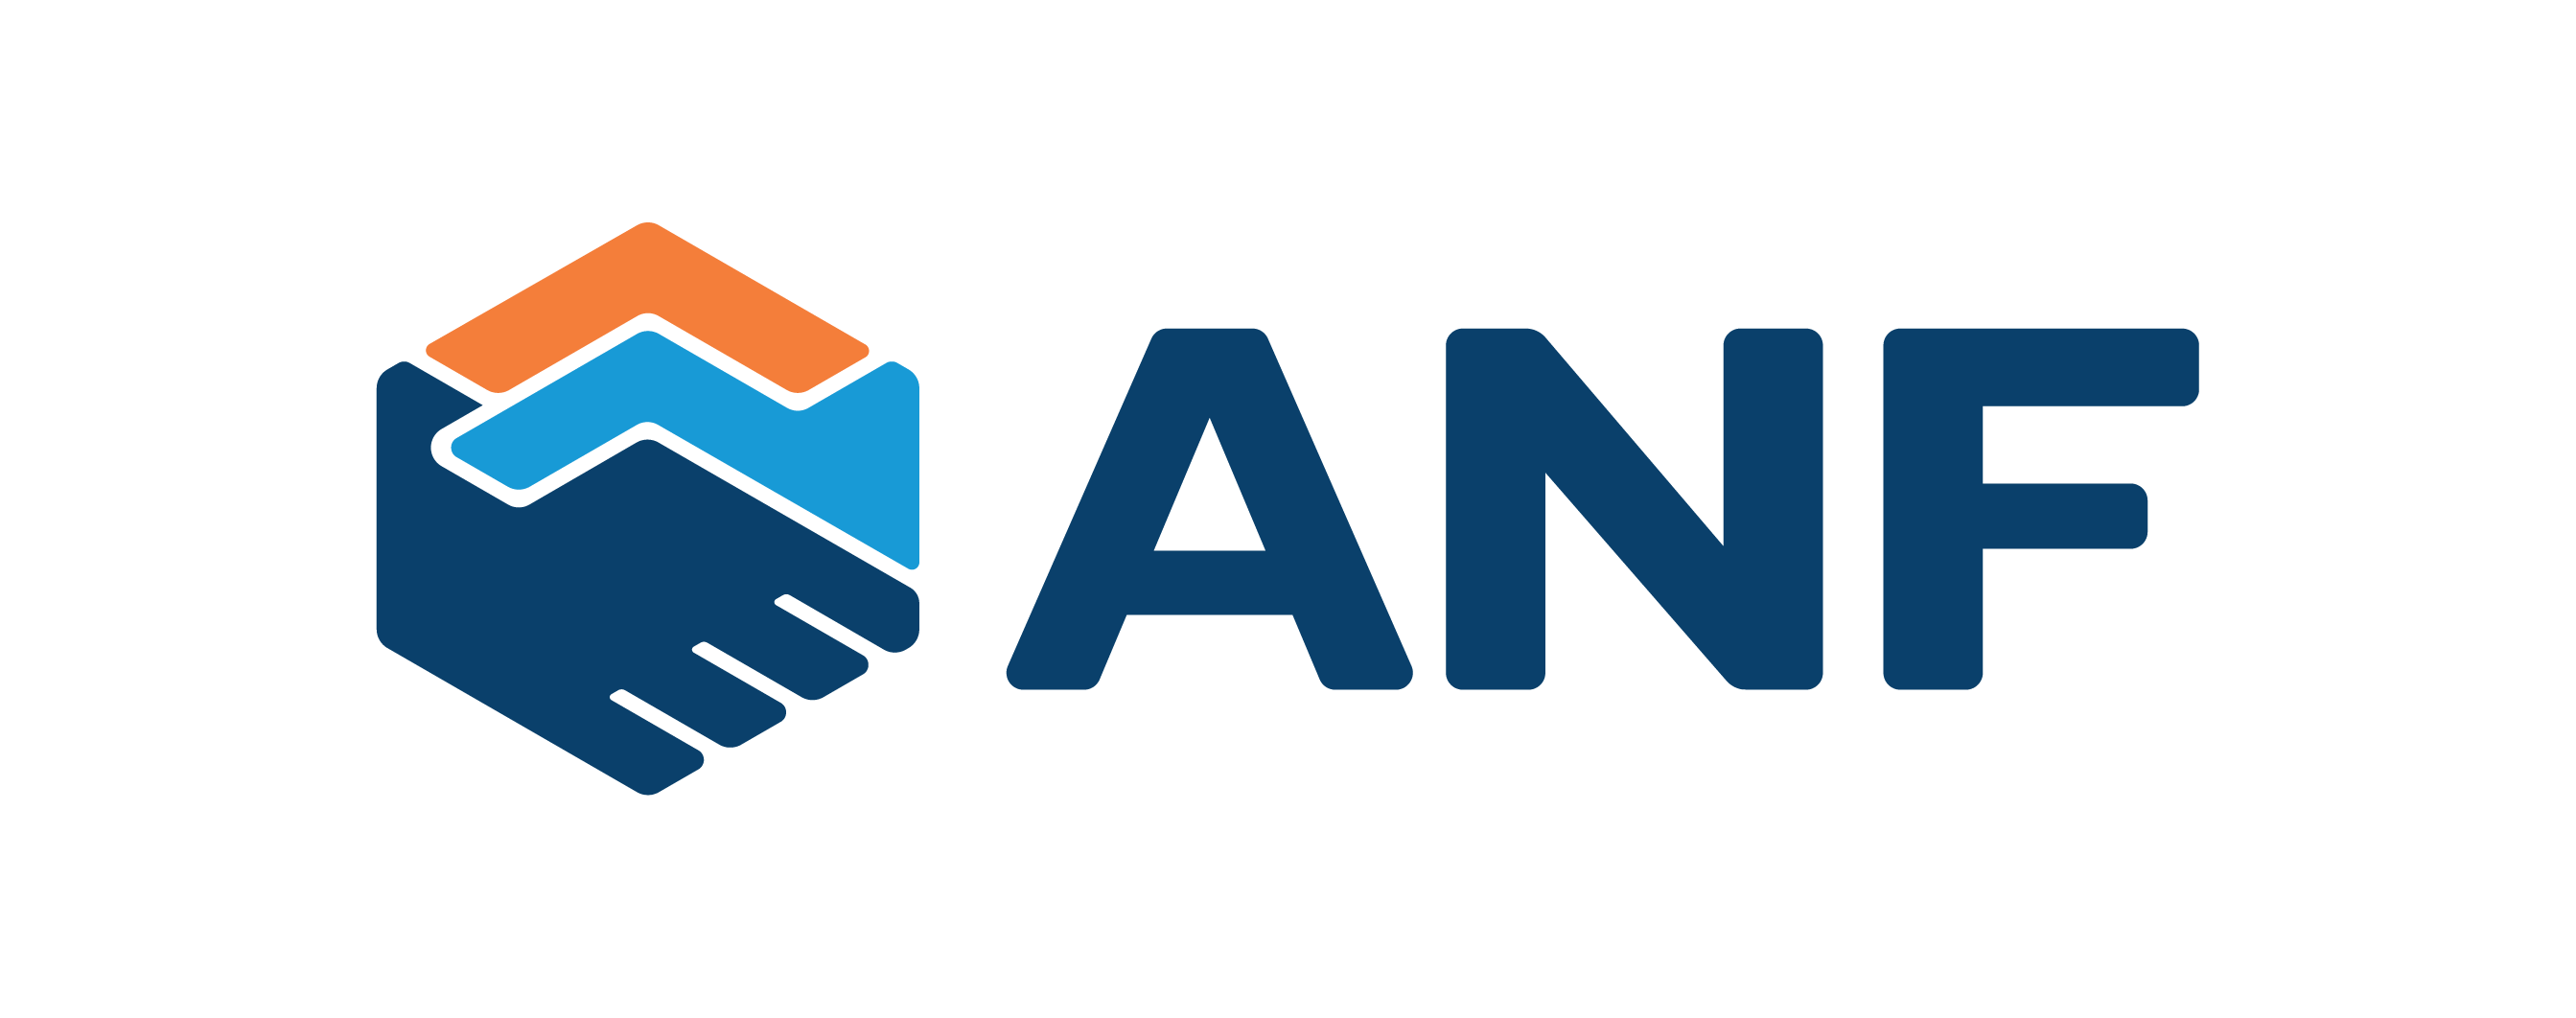 American Nicaraguan Foundation (ANF)